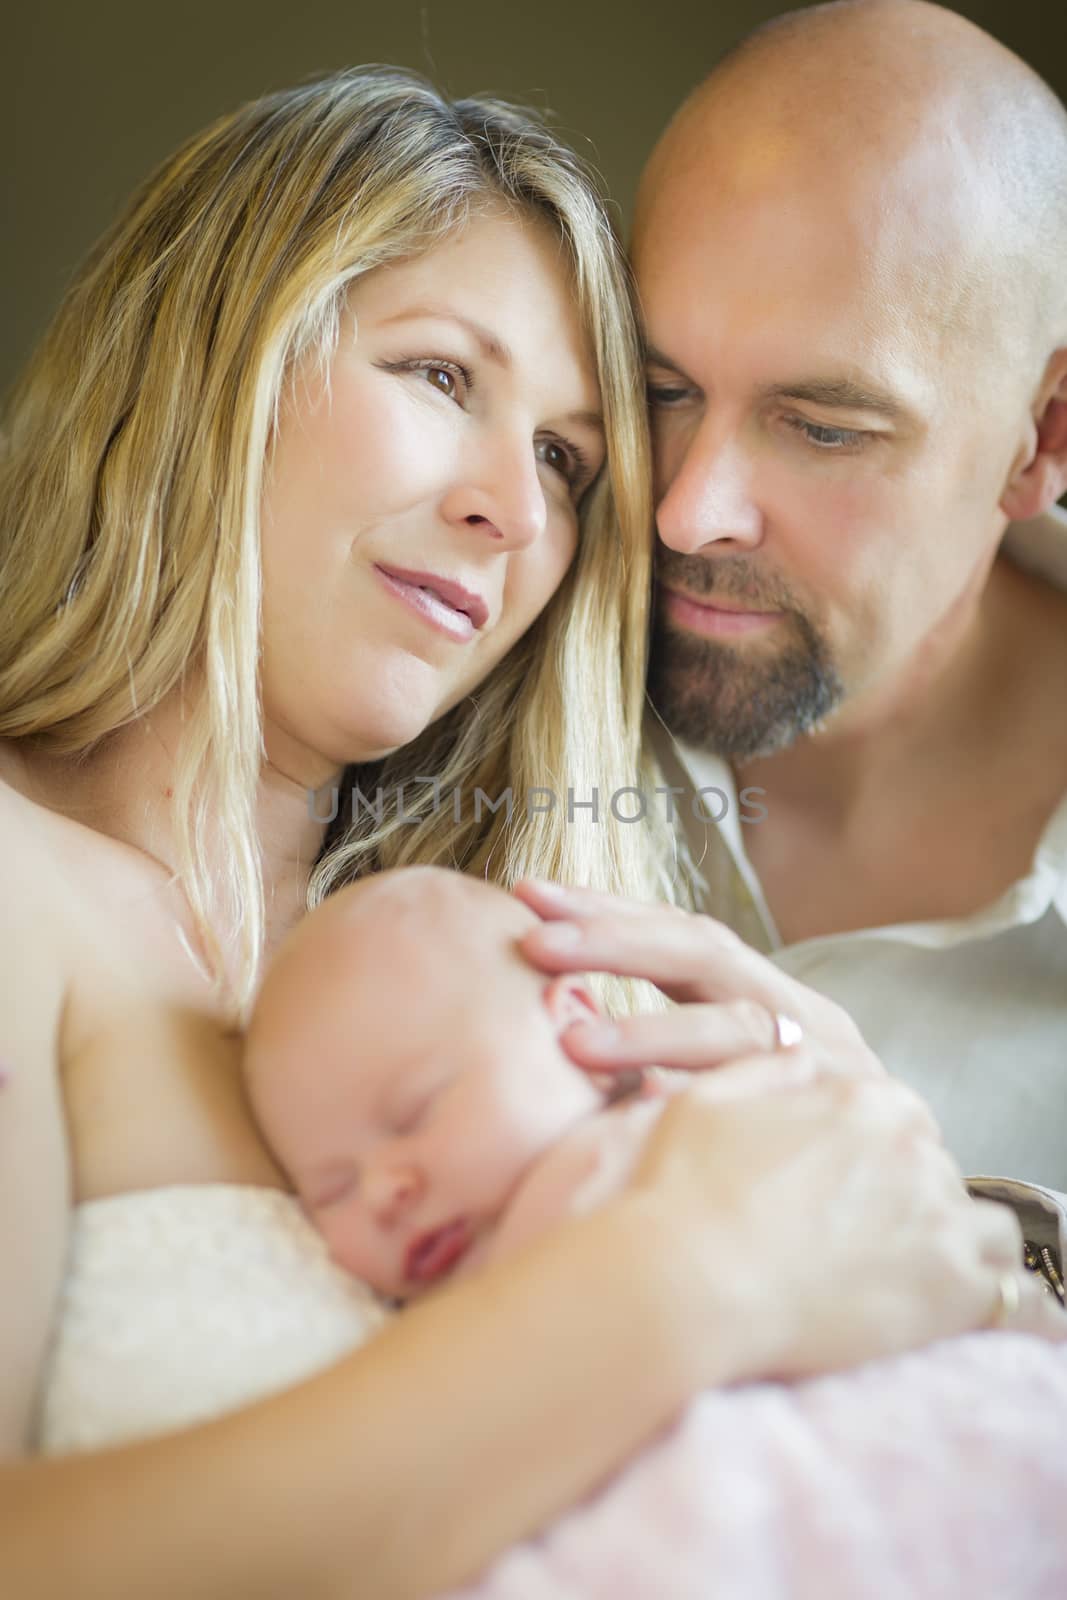 Beautiful Young Couple Holding Their Newborn Sleeping Baby Girl Inside.